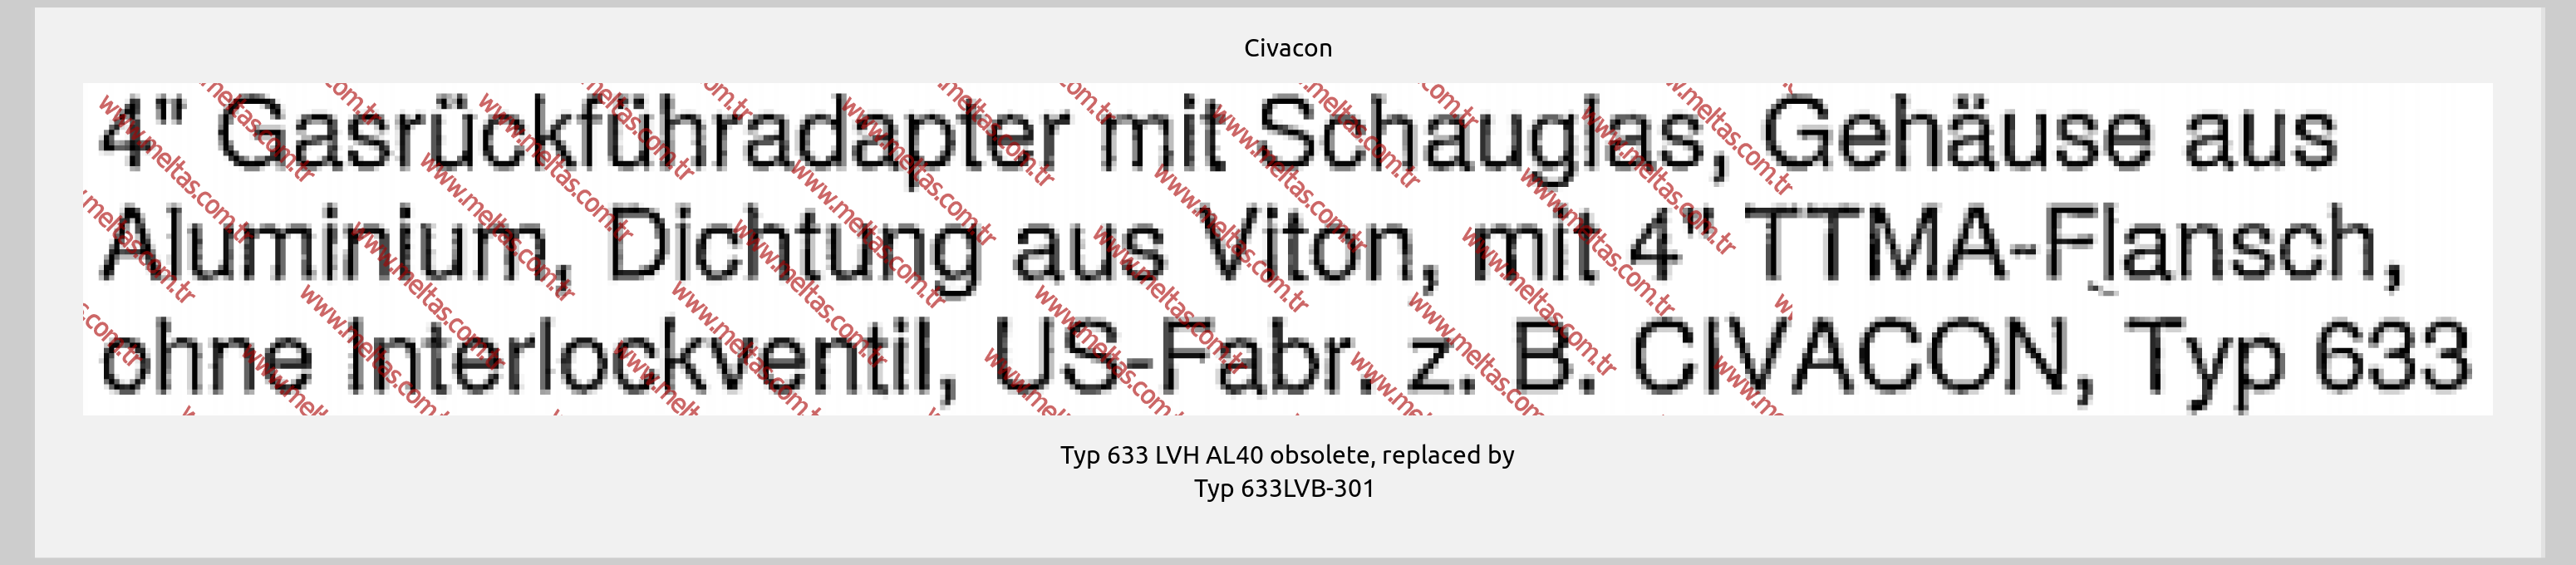 Civacon - Typ 633 LVH AL40 obsolete, replaced by Typ 633LVB-301 